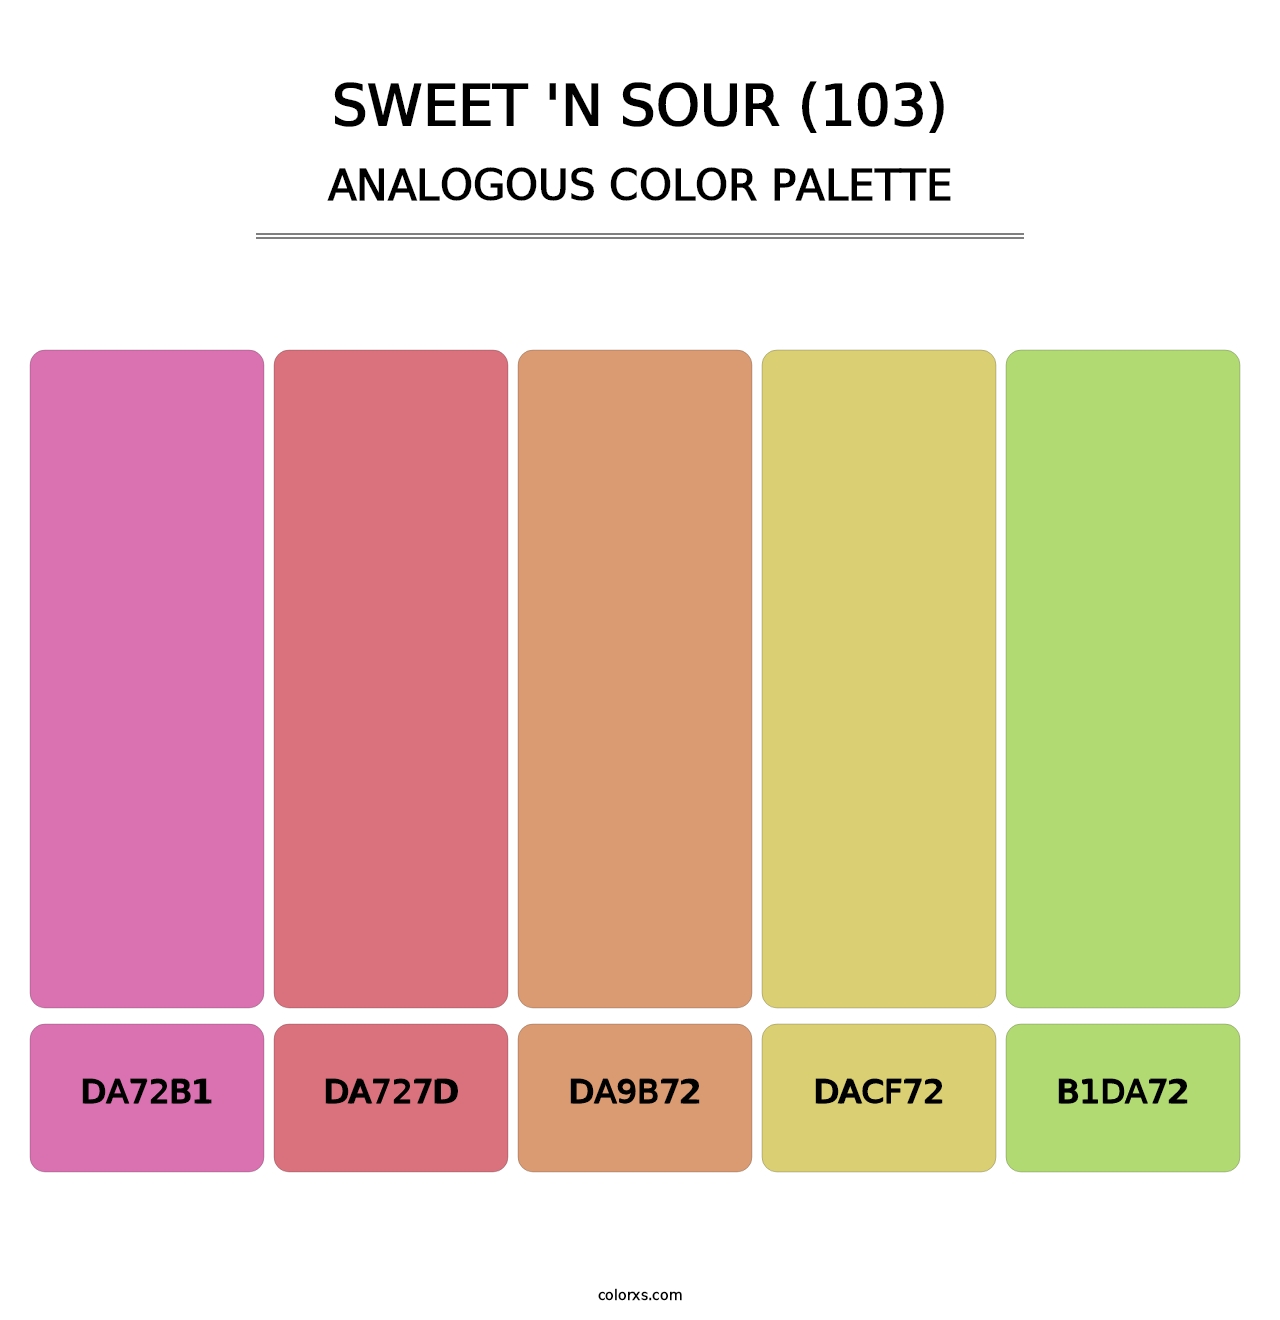 Sweet 'n Sour (103) - Analogous Color Palette